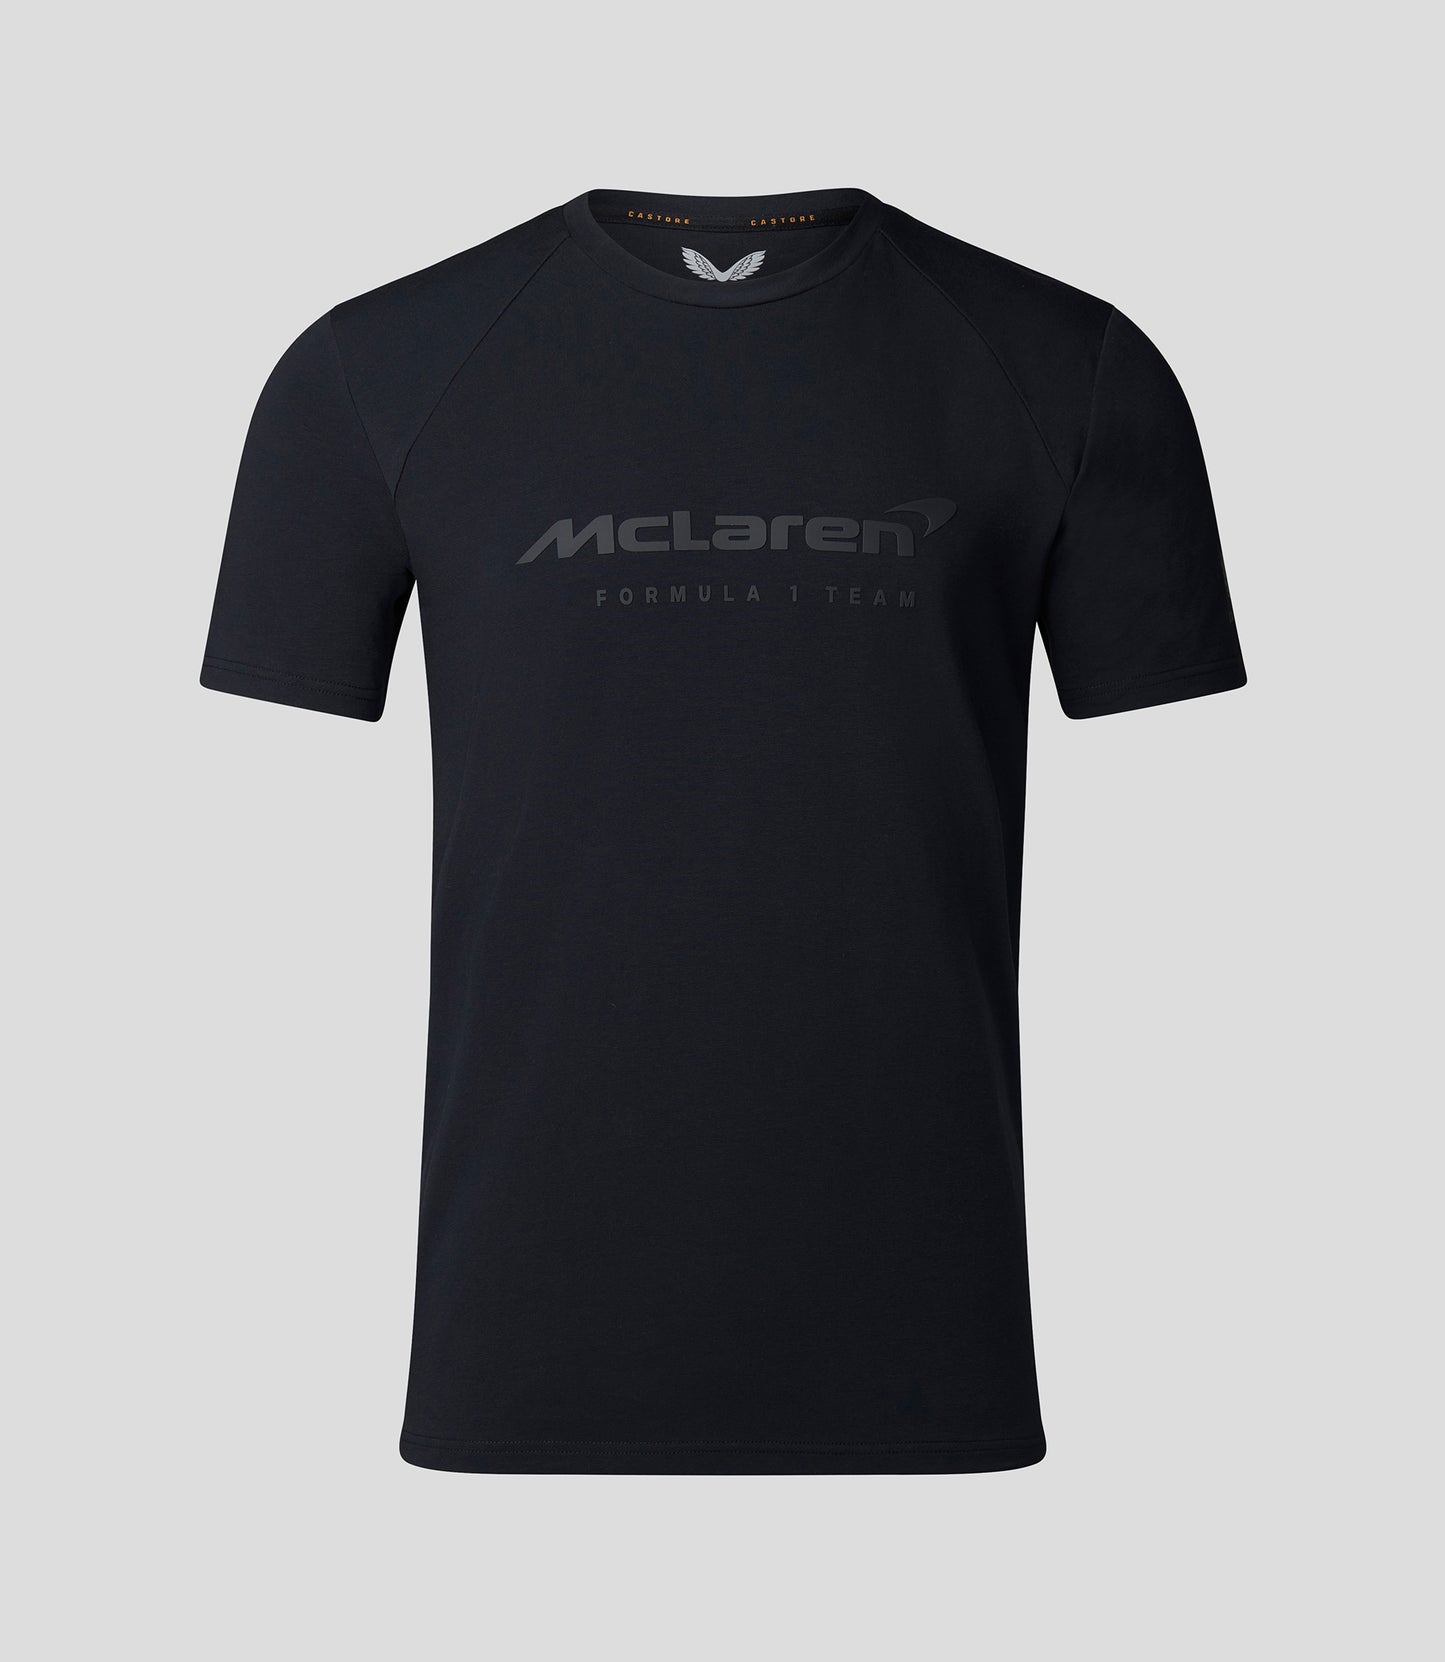 McLaren Dual Brand T-Shirt Black